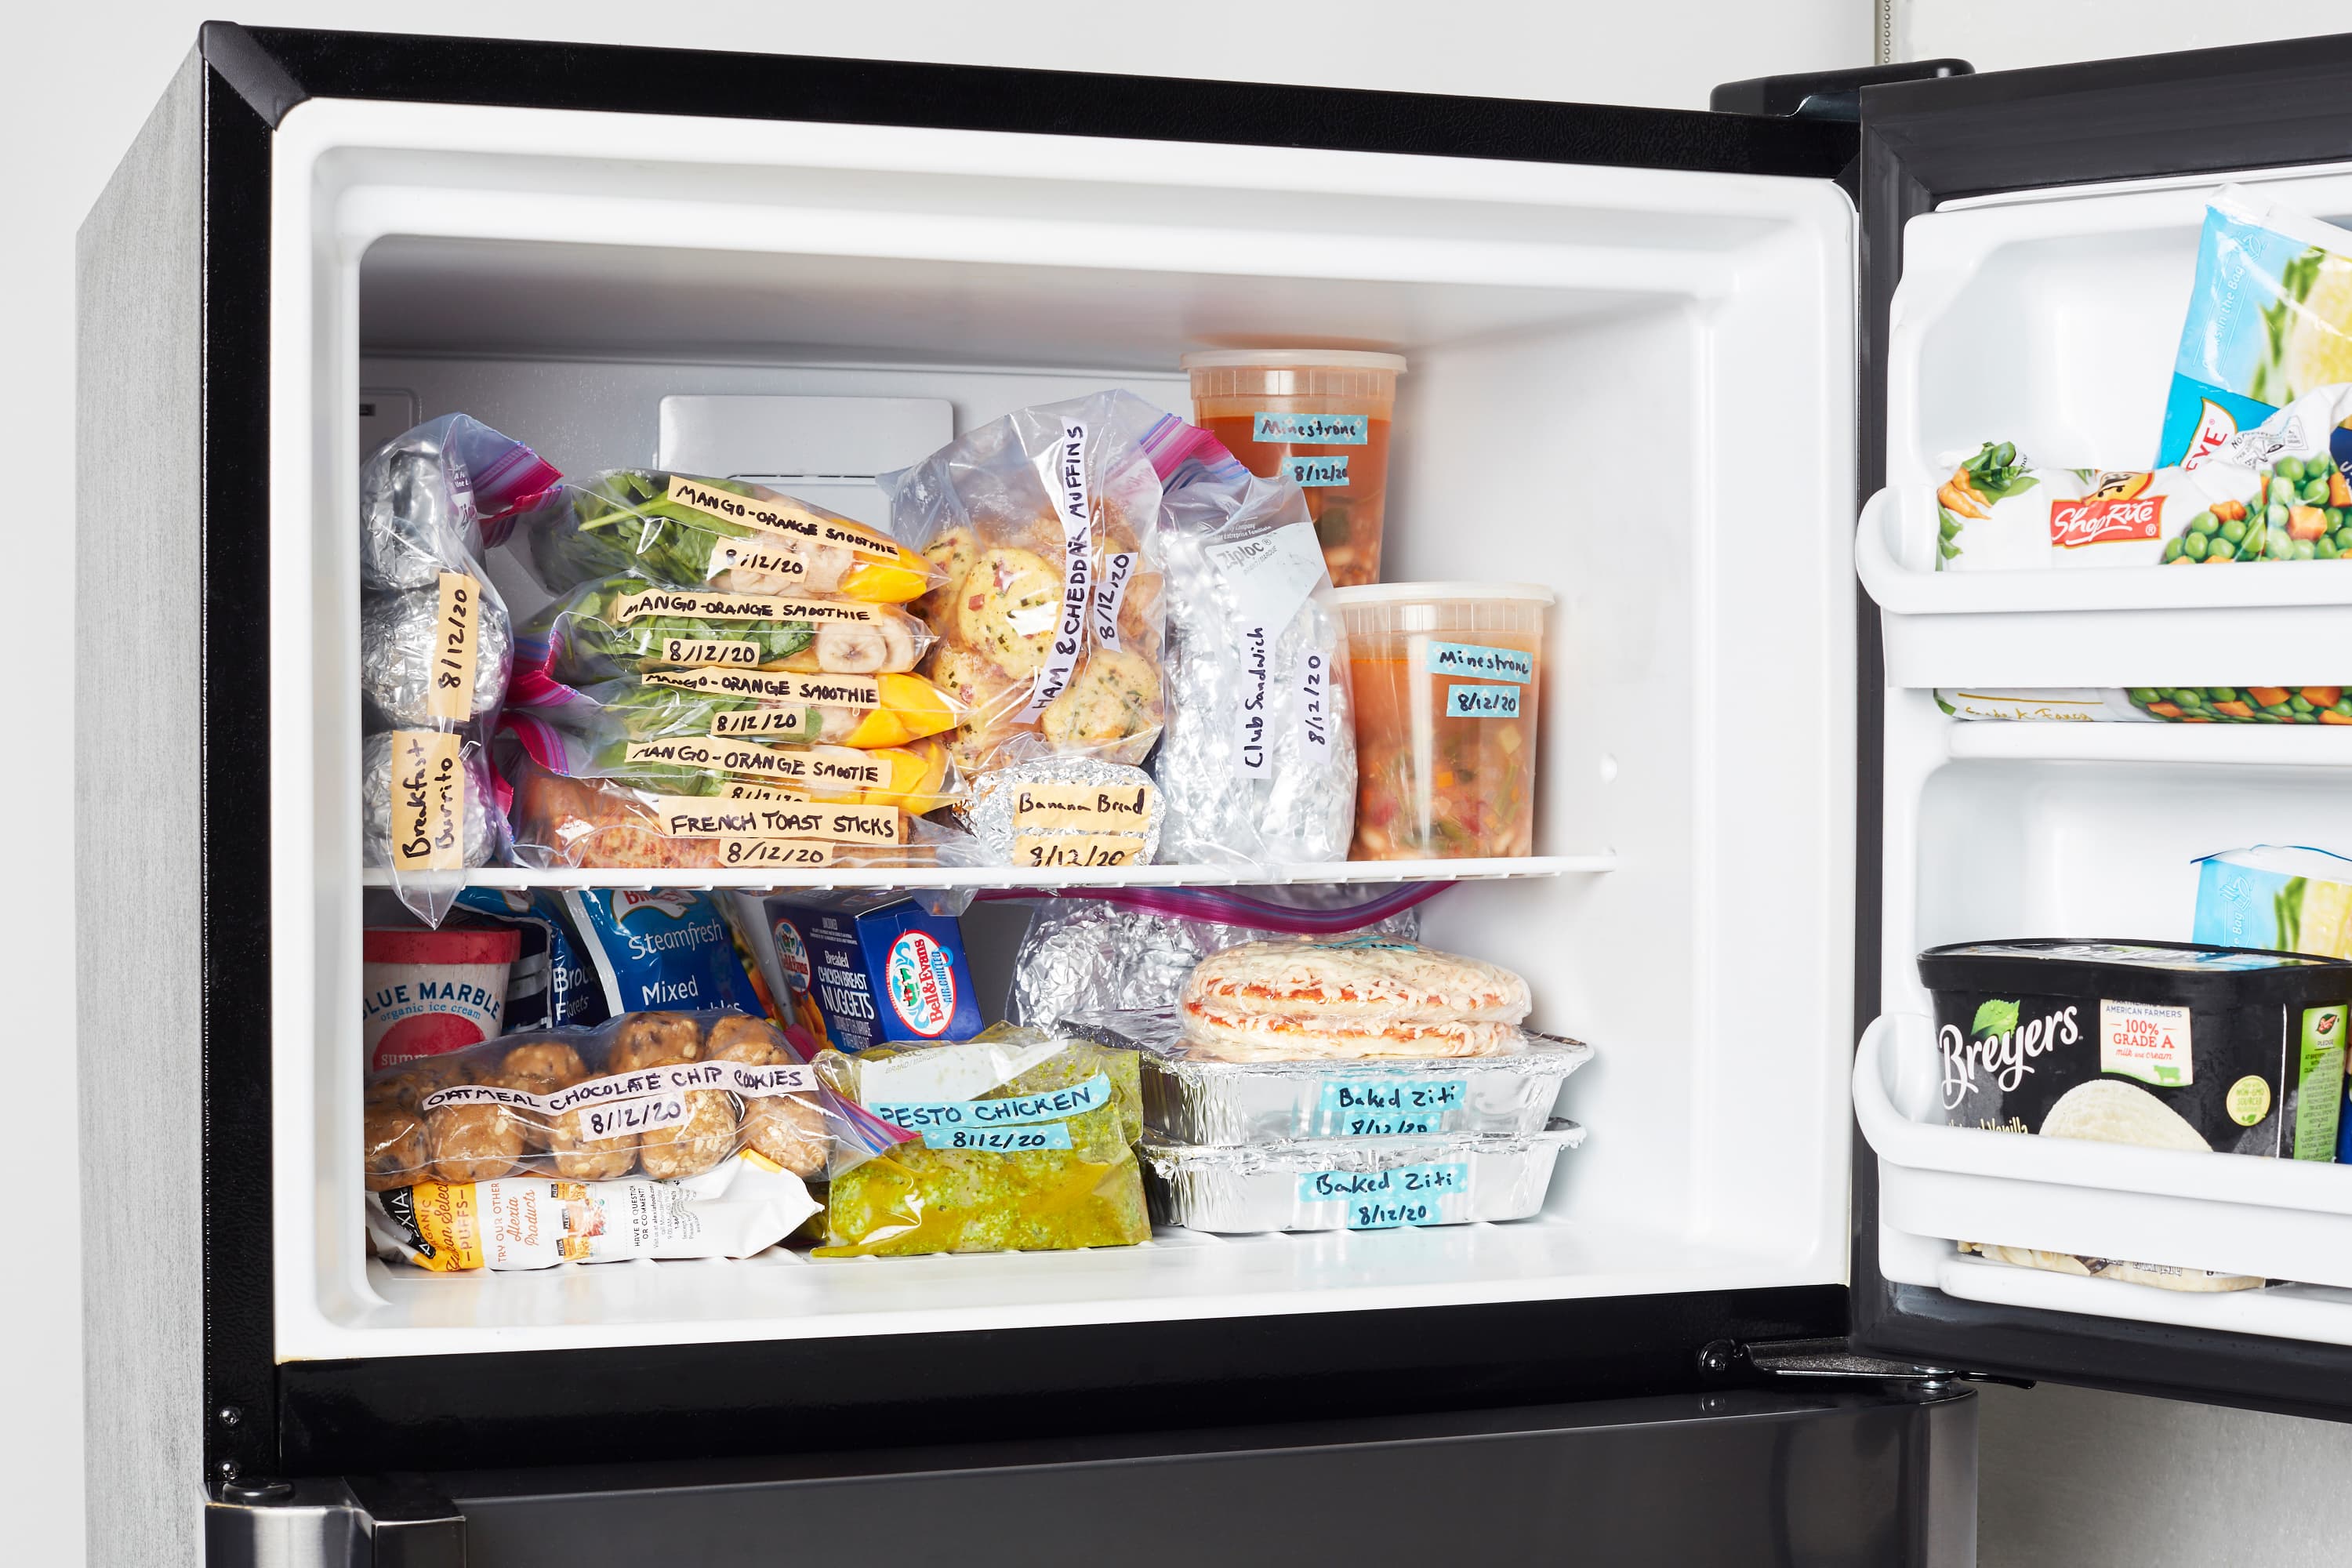 Freezer Bag Storage System Review: Organize Your Freezer In No Time